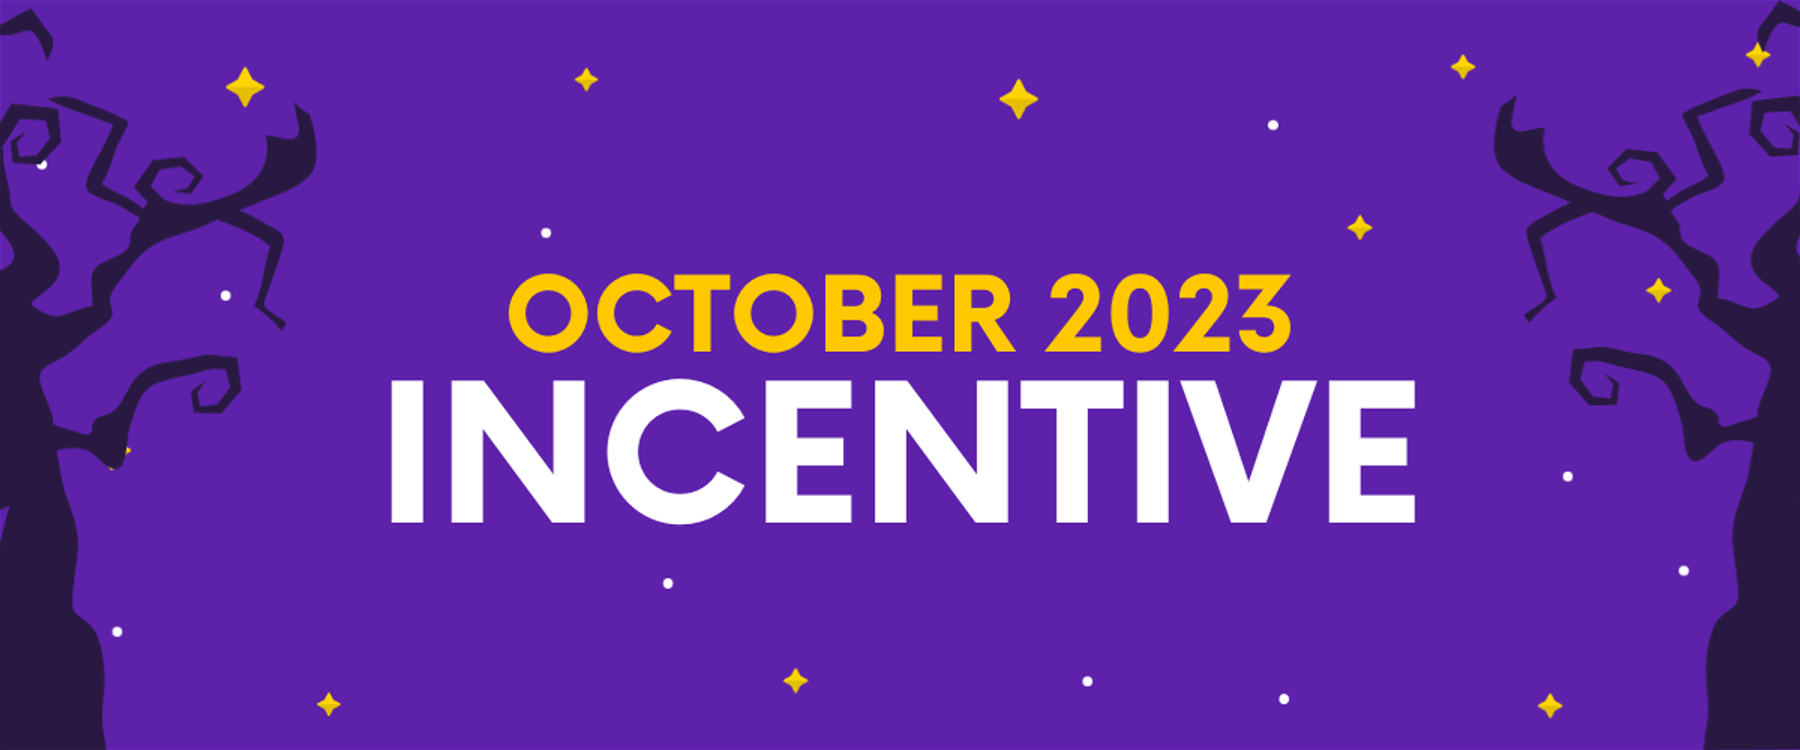 October 2023 Incentive